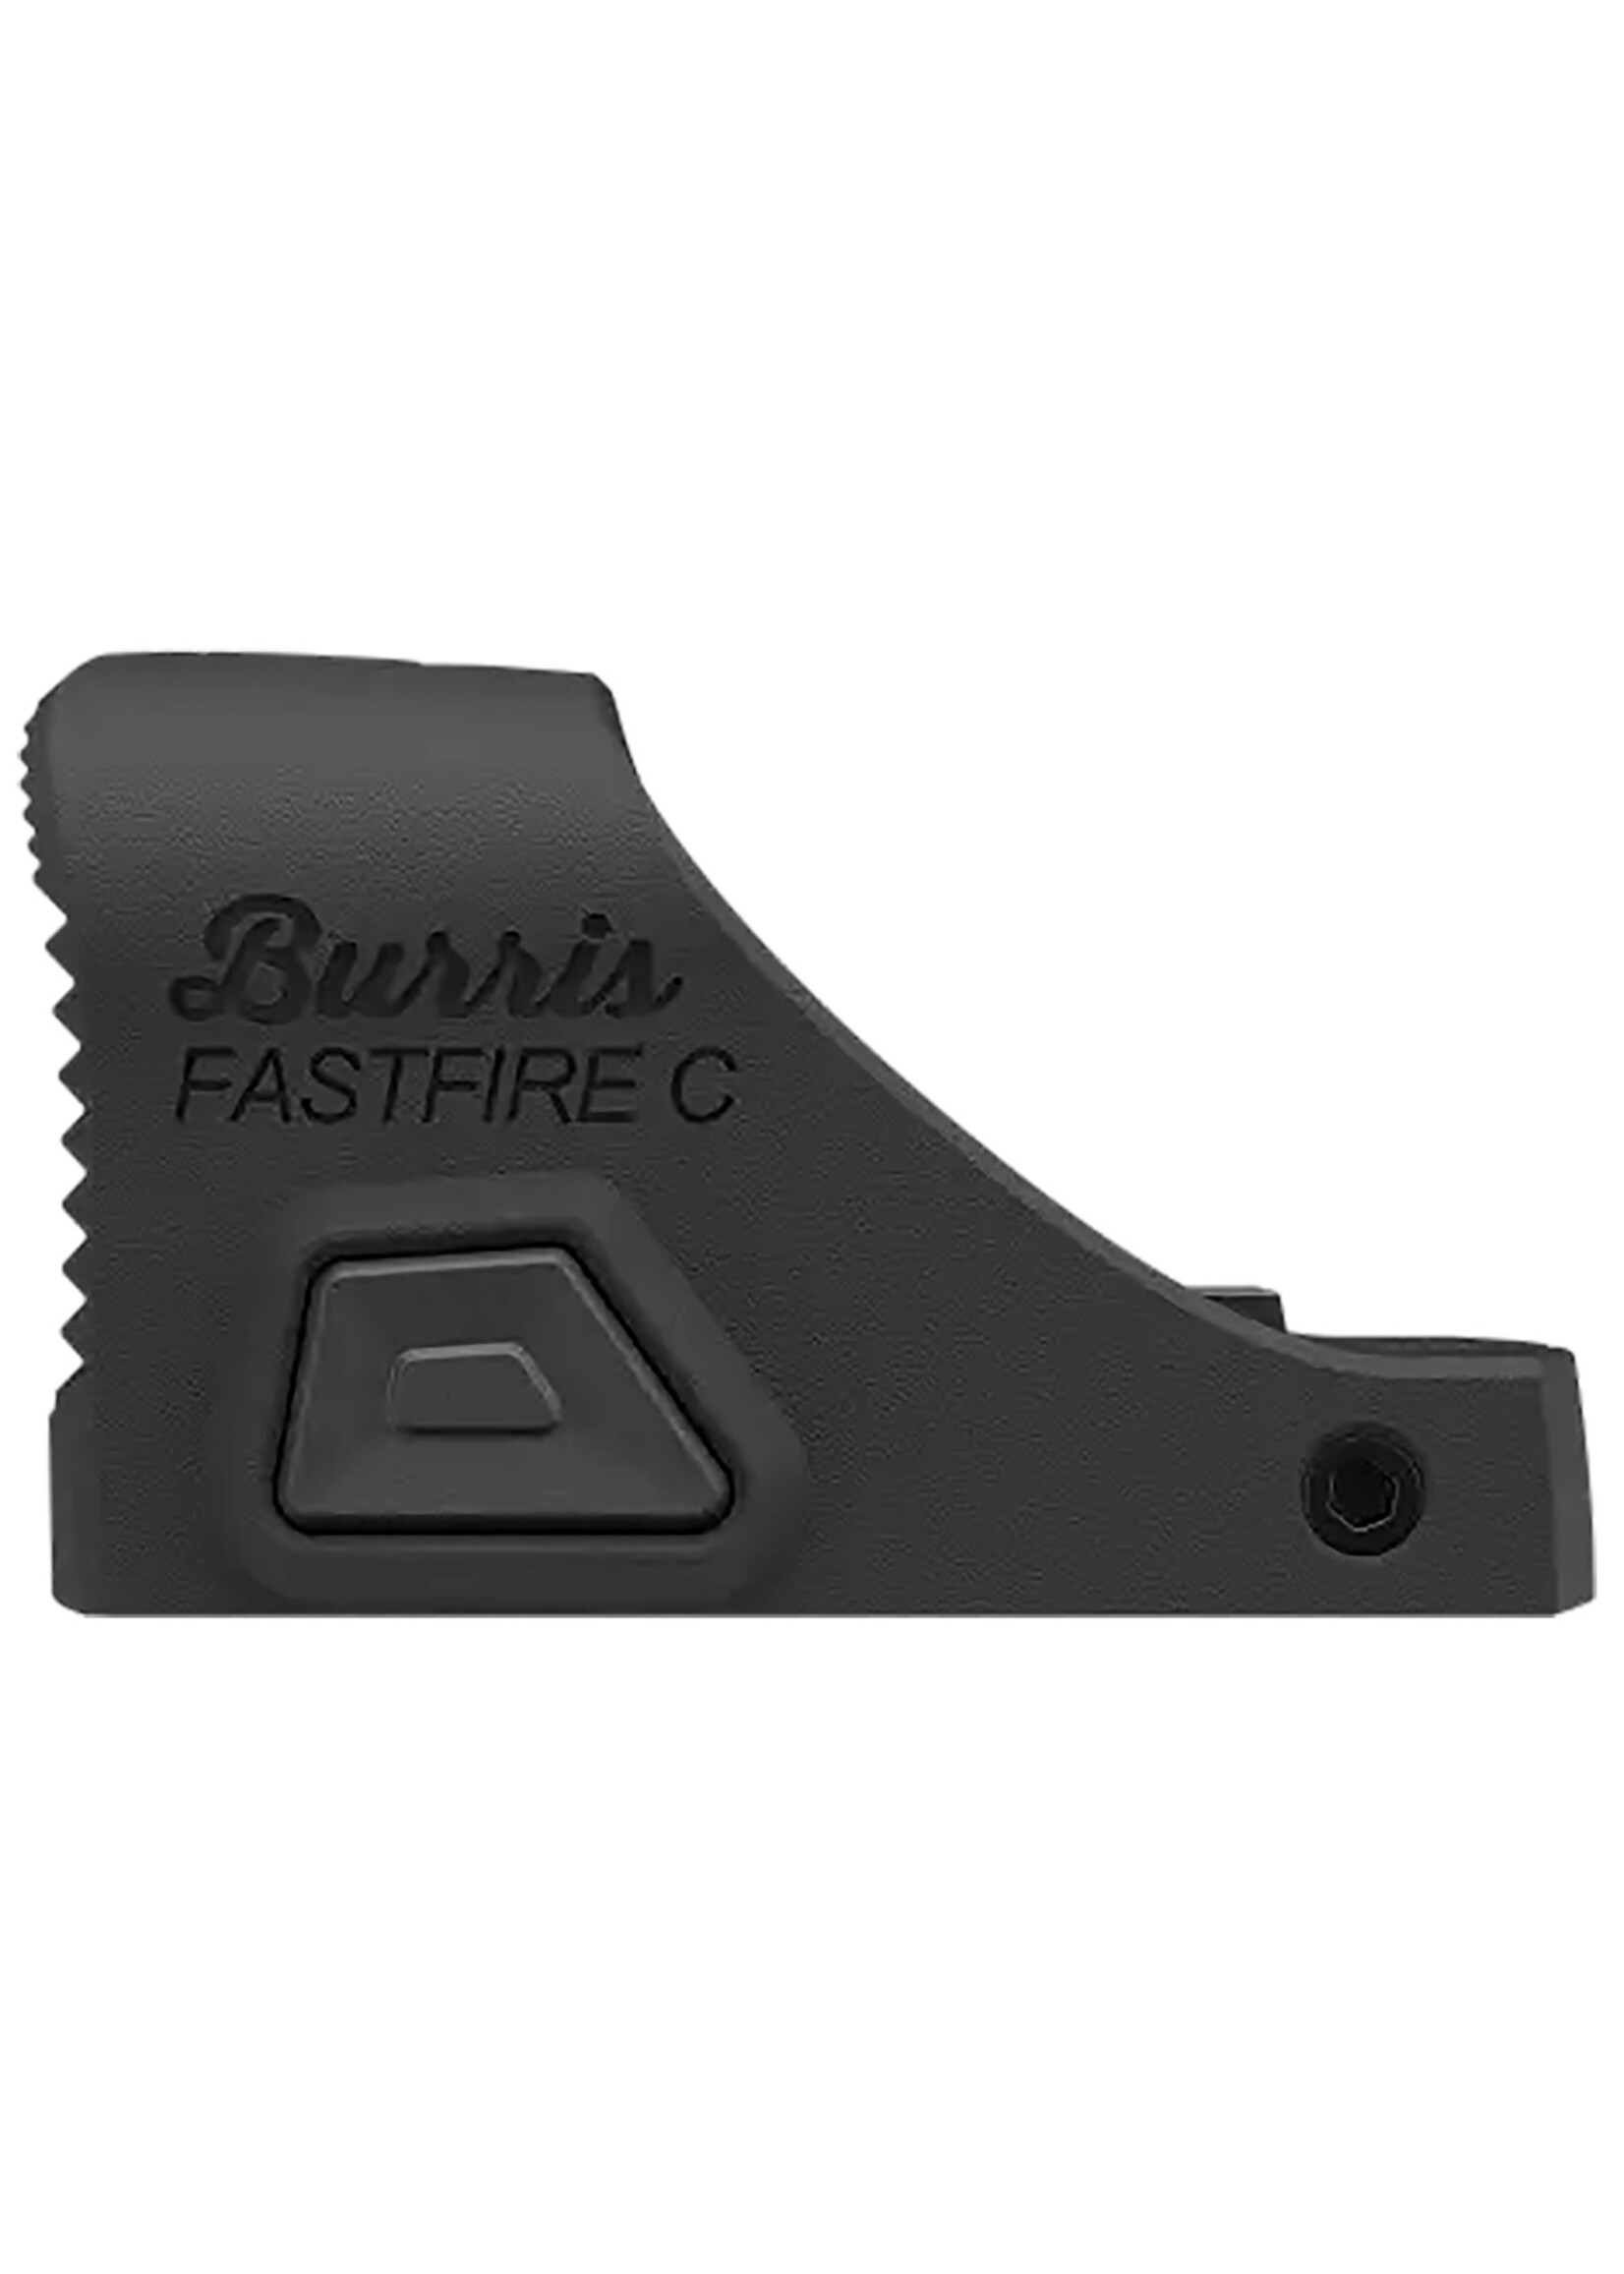 Burris Burris 300239 FastFire C Matte Black 1x22x17mm 6 MOA Red Dot Reticle Subcompact/Micro Pistols